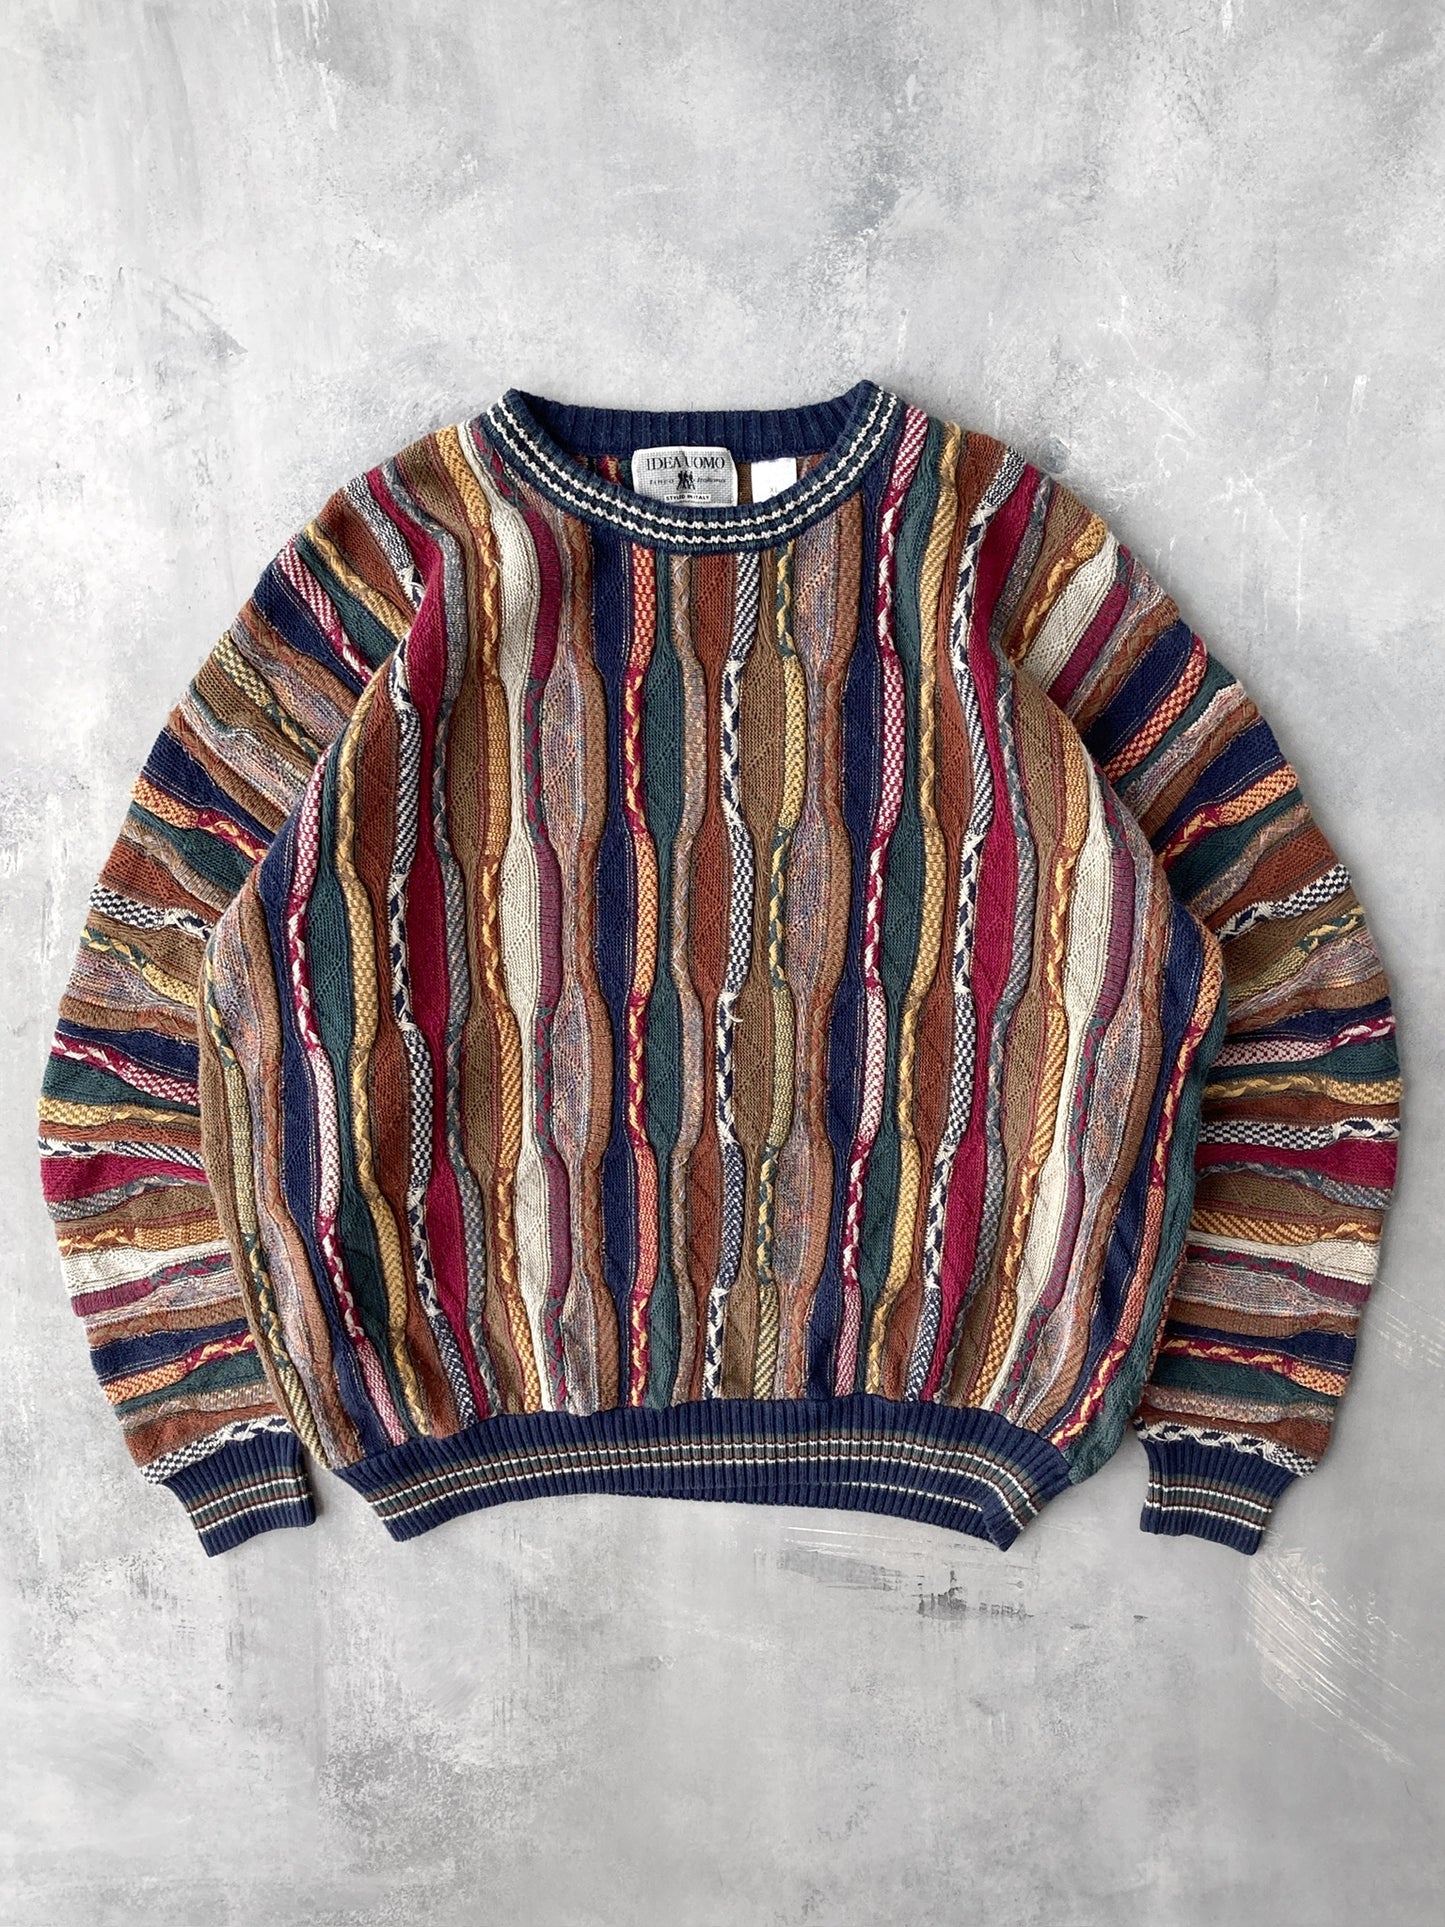 Multi Texture Sweater 90's - XL